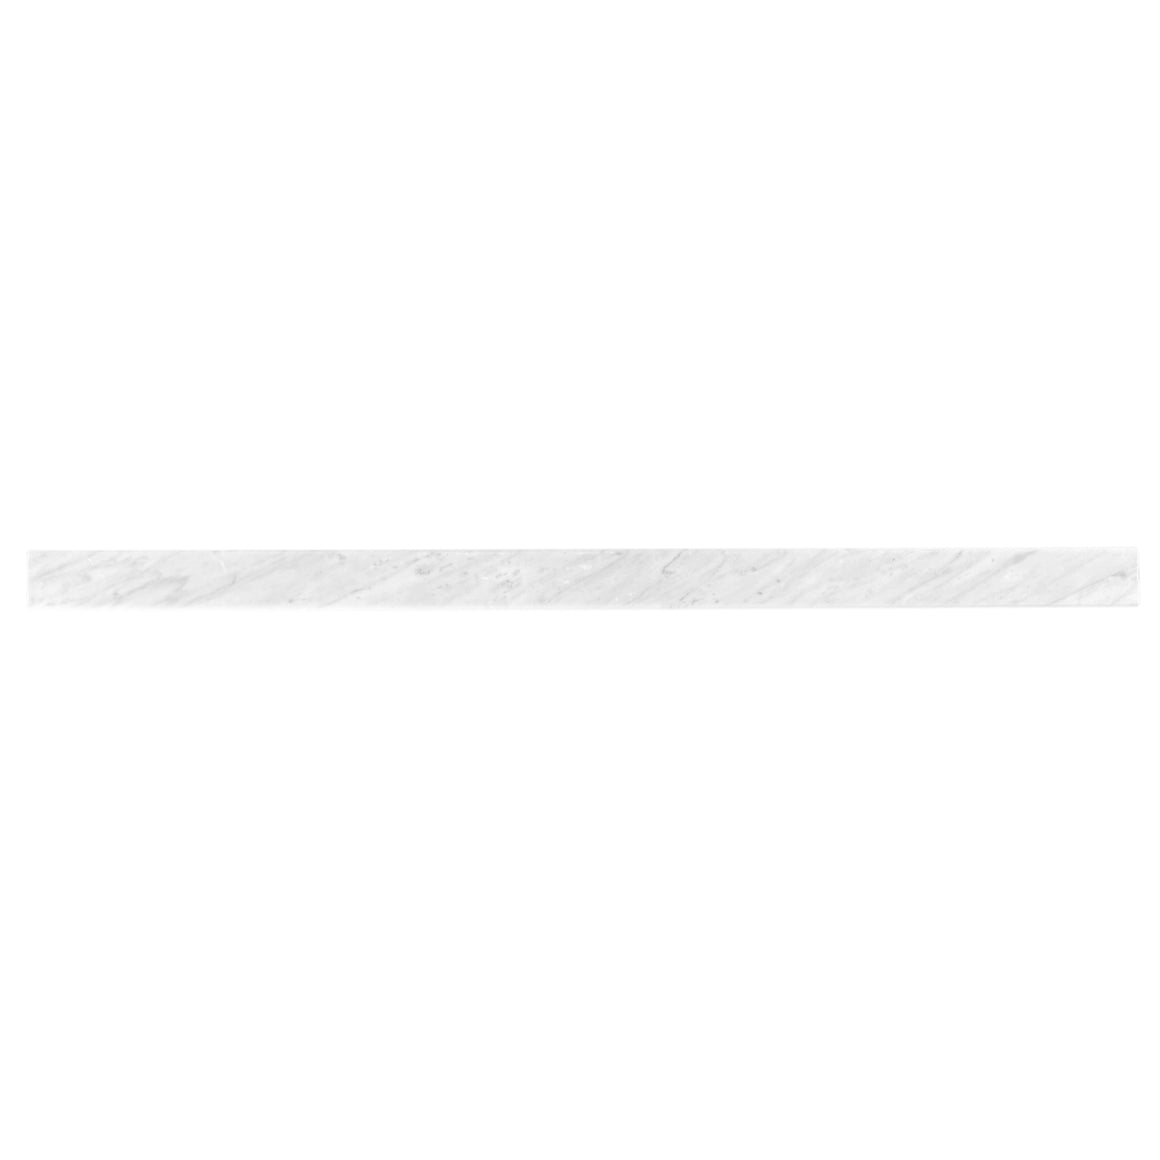 Custom Length 2x36 White Carrara Marble Thresholds Saddles Window Sills Marble Engineered Stone Standard Bevel Polished